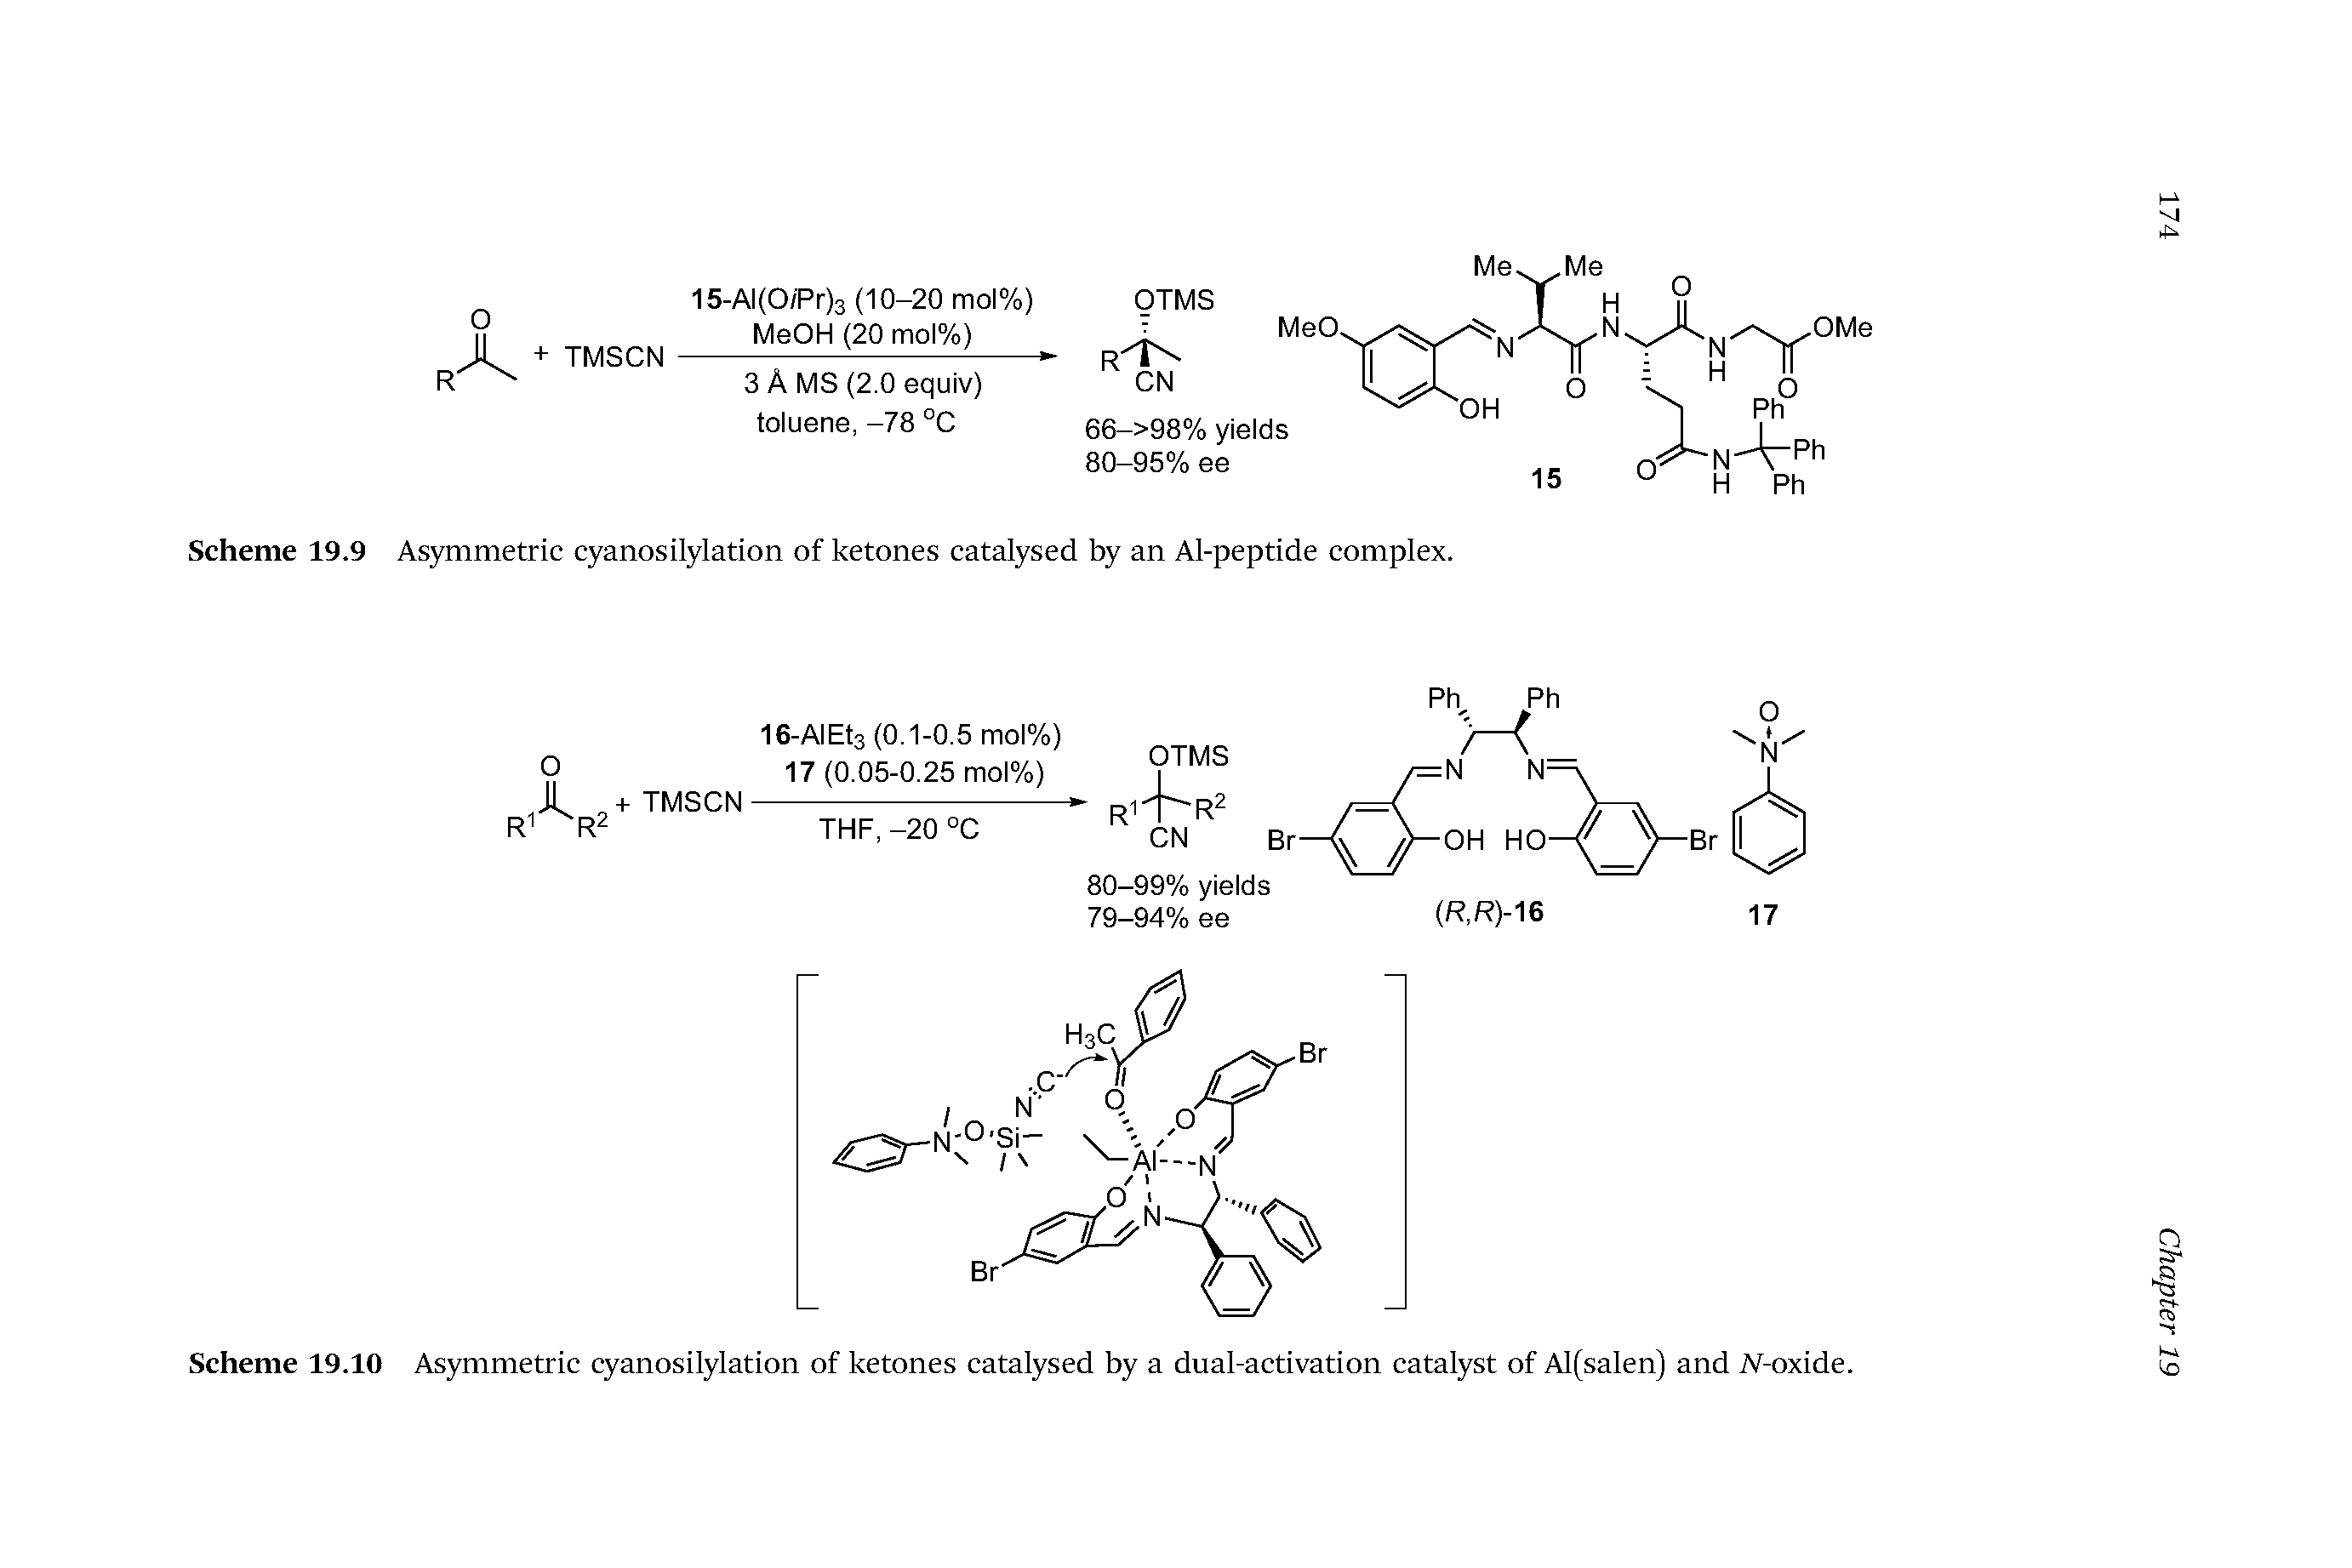 Scheme 19.10 Asymmetric cyanosilylation of ketones catalysed by a dual-activation catalyst of Al(salen) and JV-oxide.